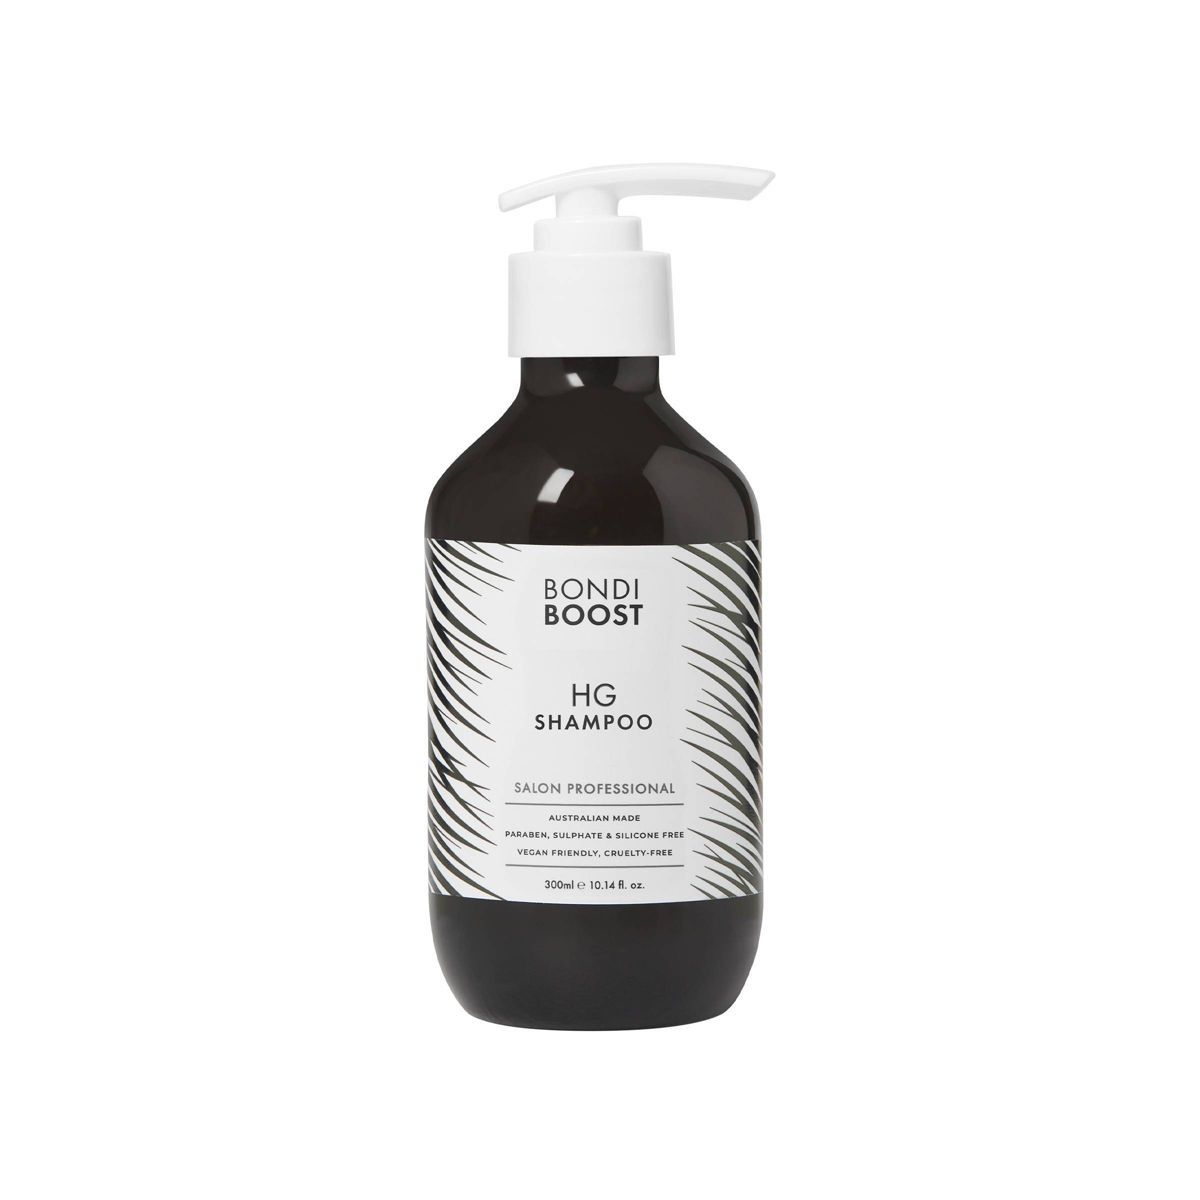 Bondi Boost HG Shampoo - Ulta Beauty | Target